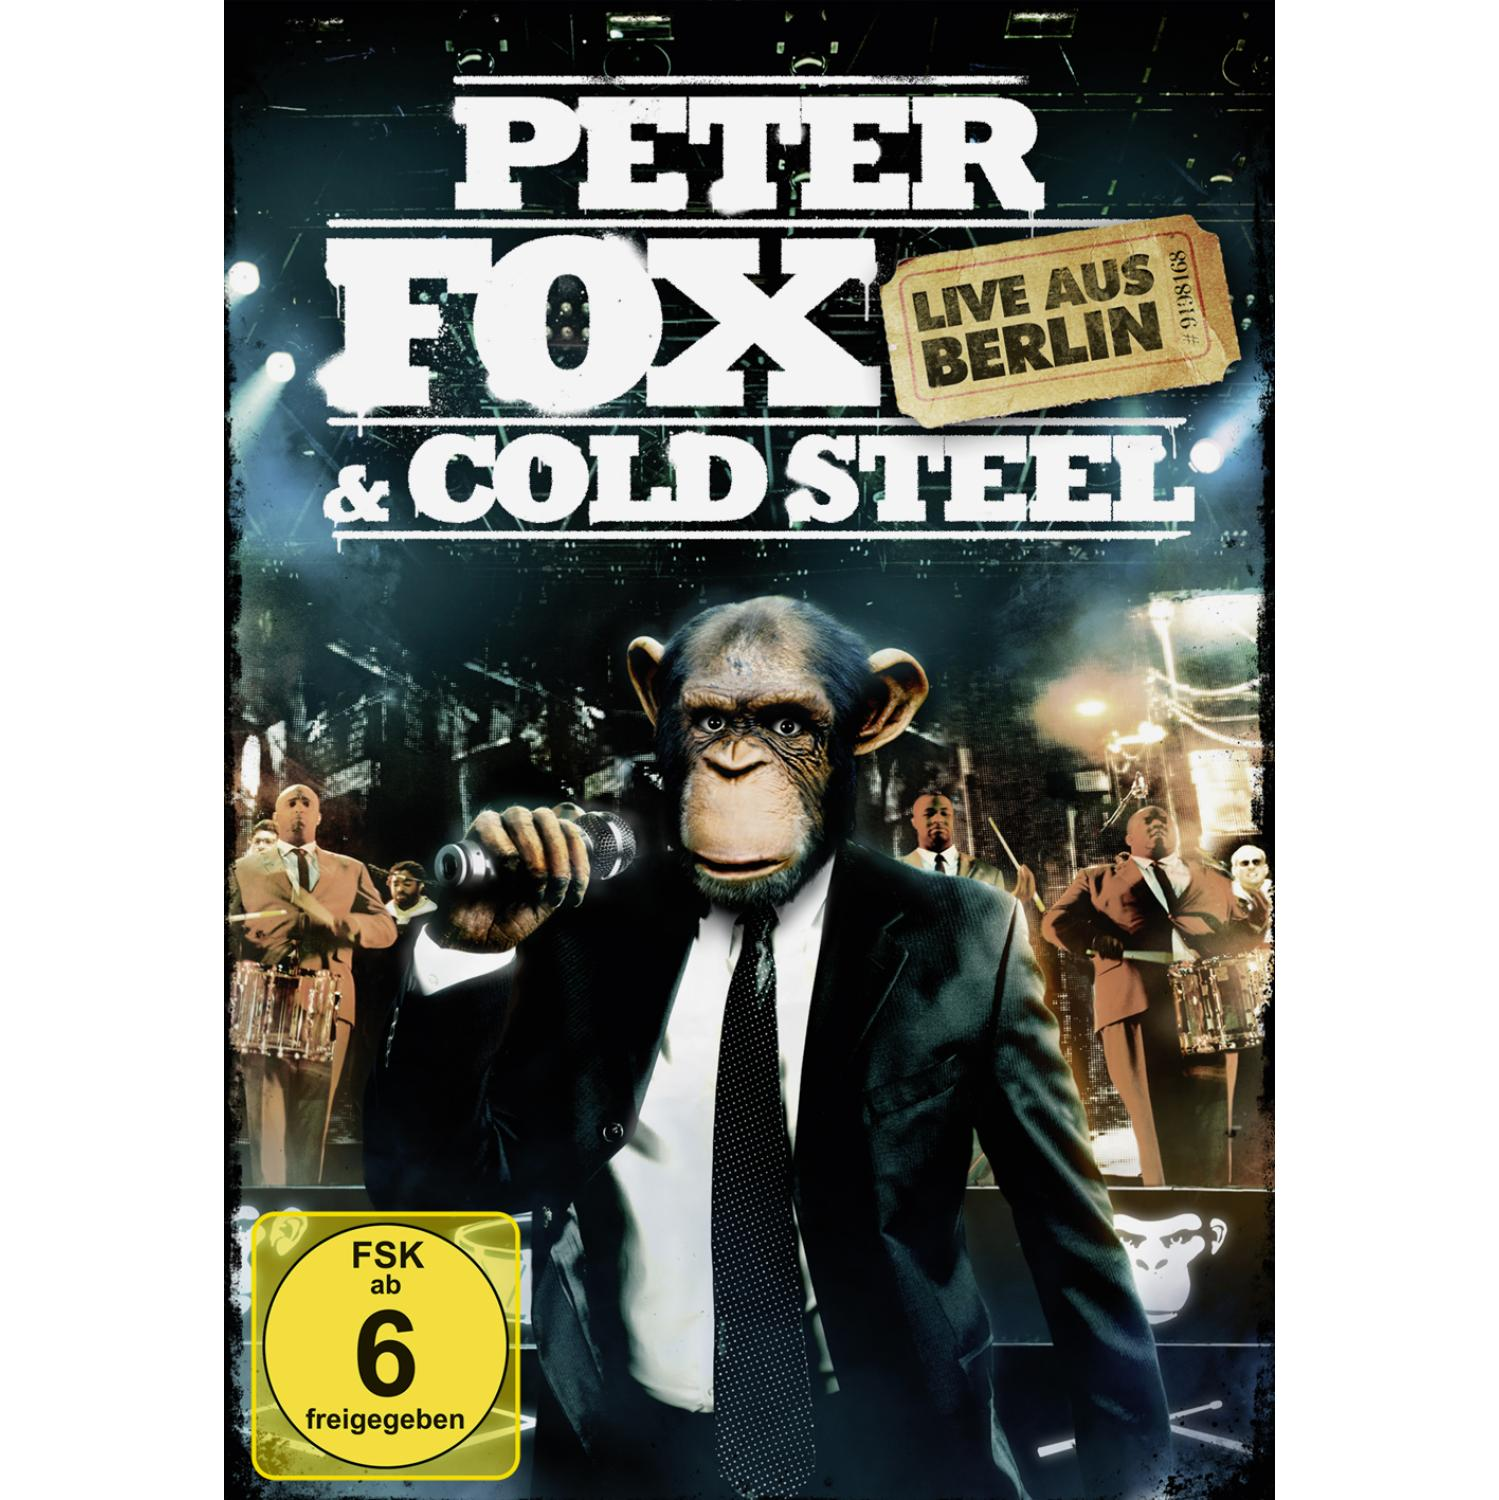 Peter Fox & Cold aus Steel - Live (DVD) - Berlin